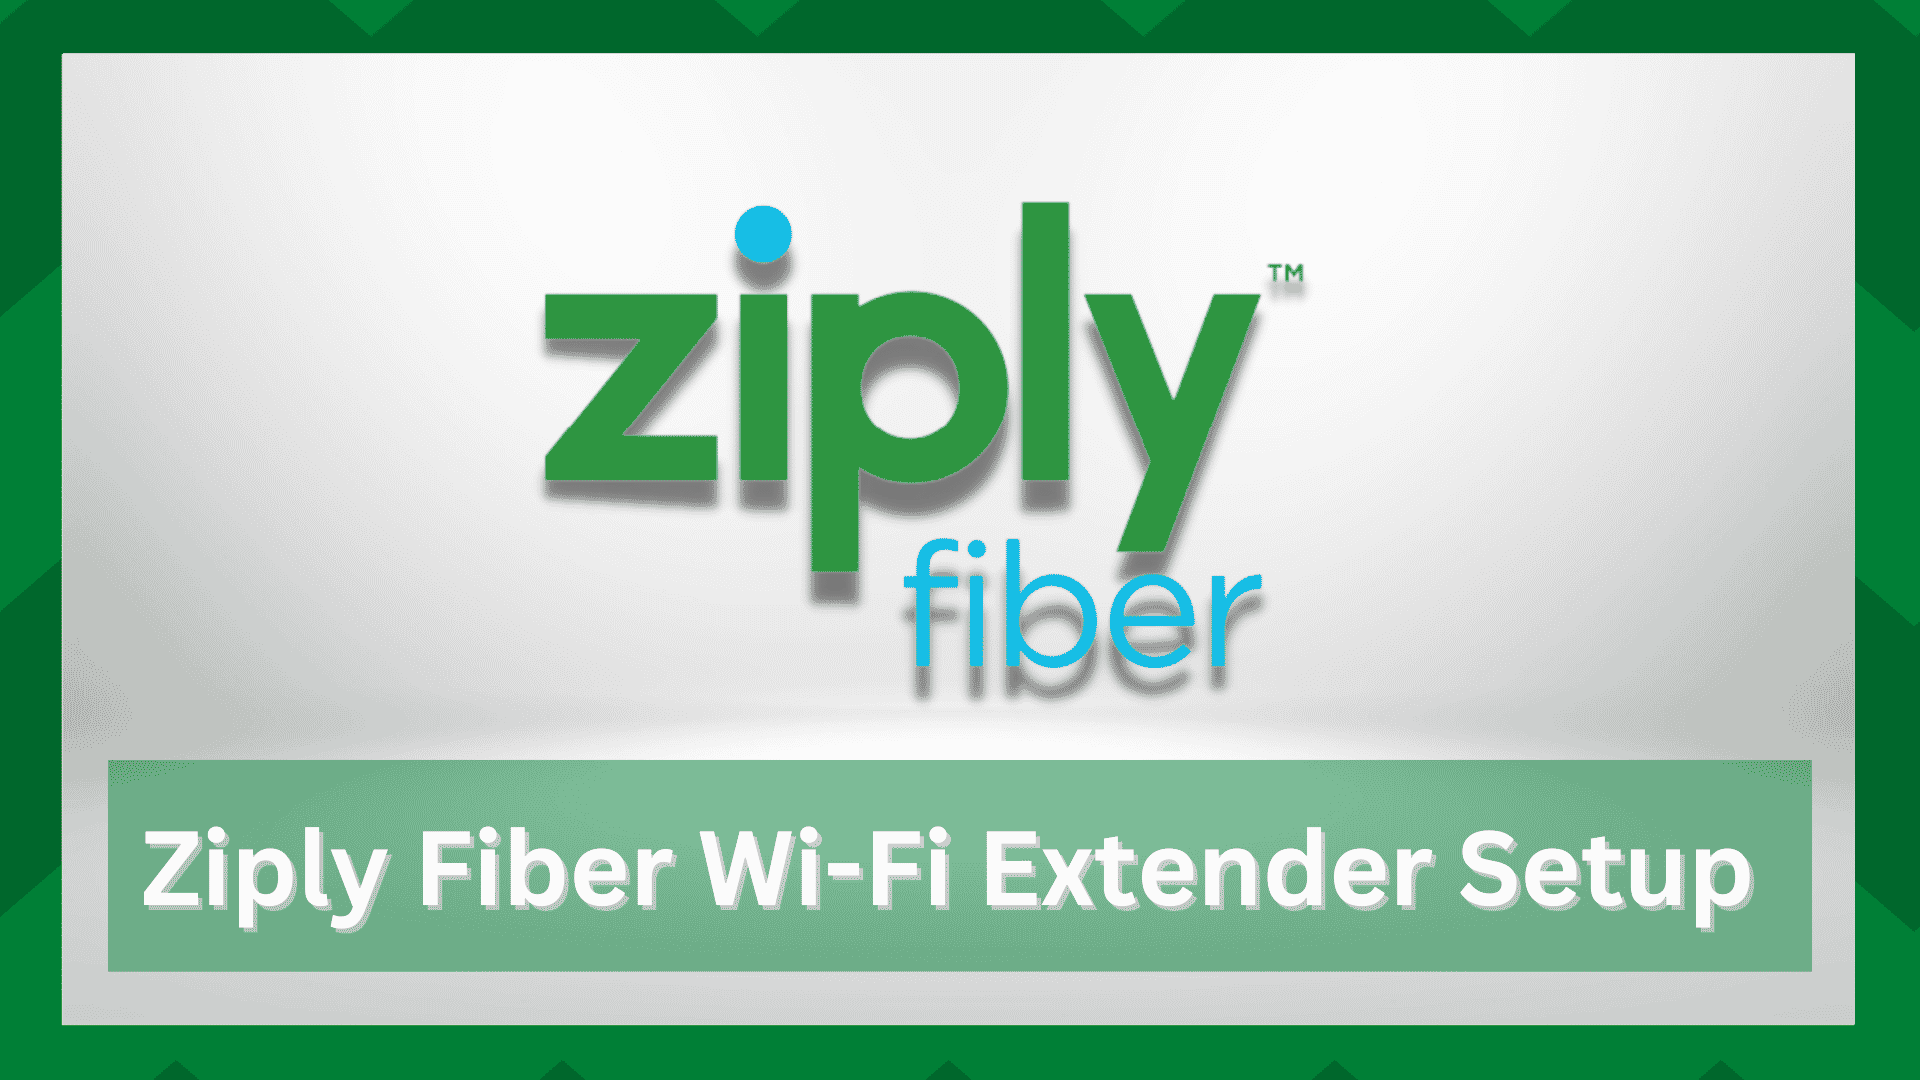 2 Ziply Fiber Wi-Fi Extender စနစ်ထည့်သွင်းခြင်းအတွက် အမြန်လမ်းညွှန်